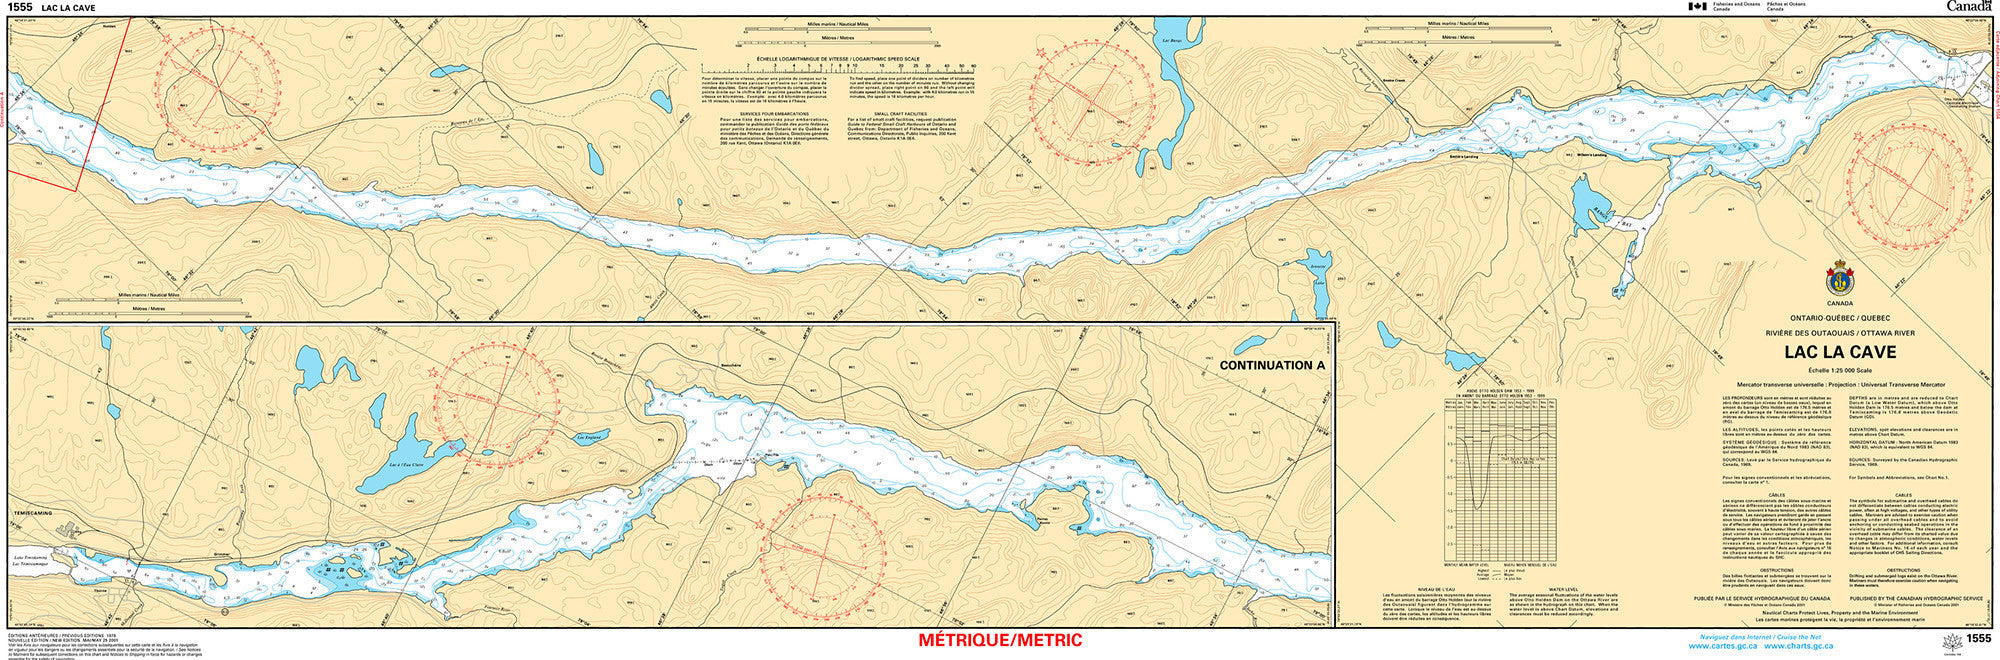 Canadian Hydrographic Service Nautical Chart CHS1555: Lac la Cave